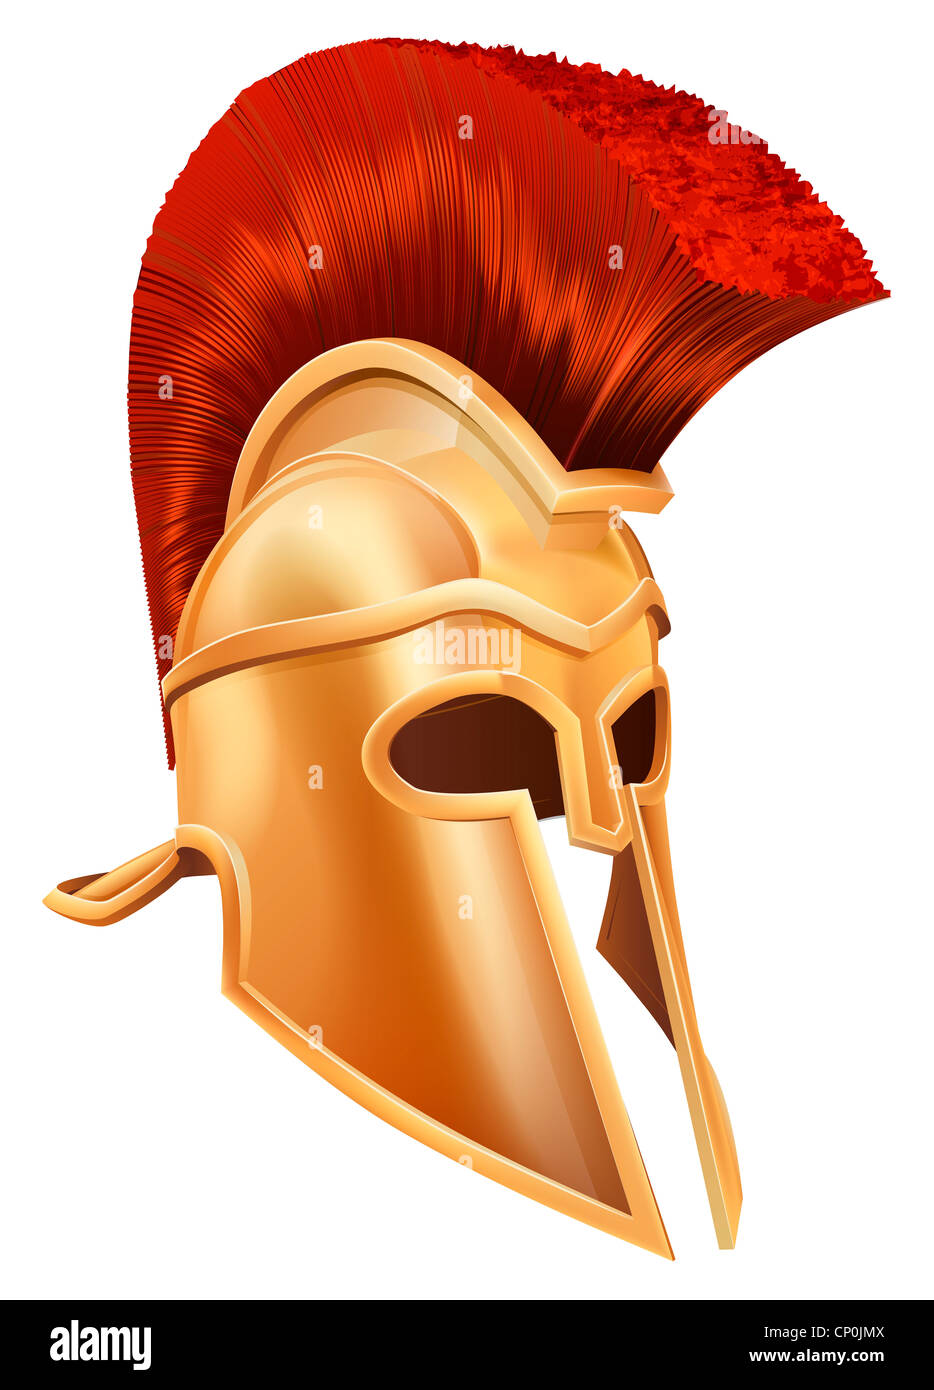 Illustration of a bronze Trojan Helmet, Spartan helmet, Roman helmet or Greek helmet. Corinthian style. Stock Photo